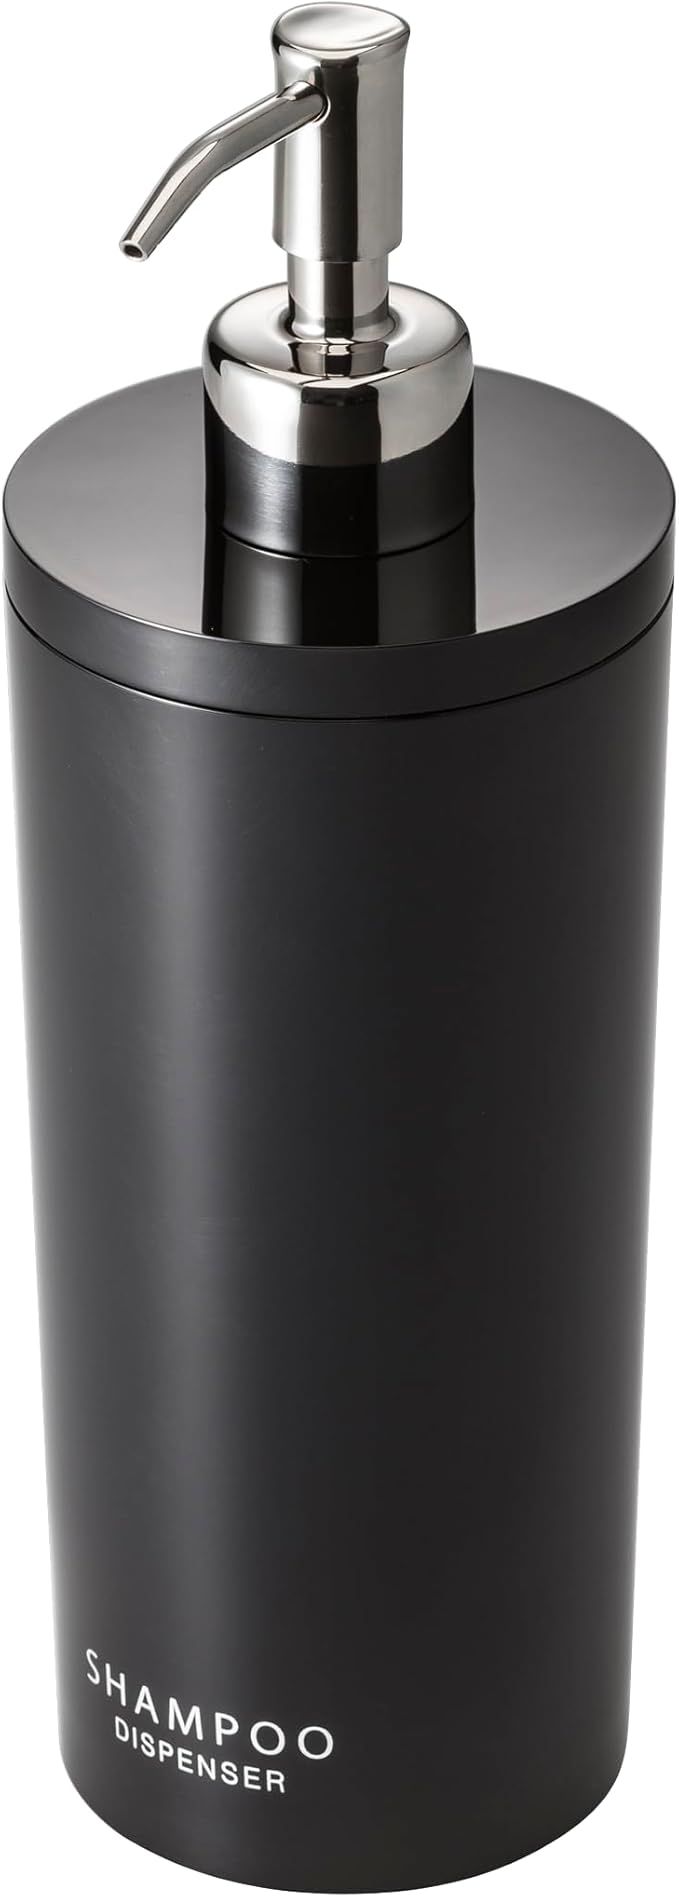 Yamazaki 2929 Tower Shampoo Dispenser Contemporary Bottle Pump for Shower, Round, Black & Silver | Amazon (US)